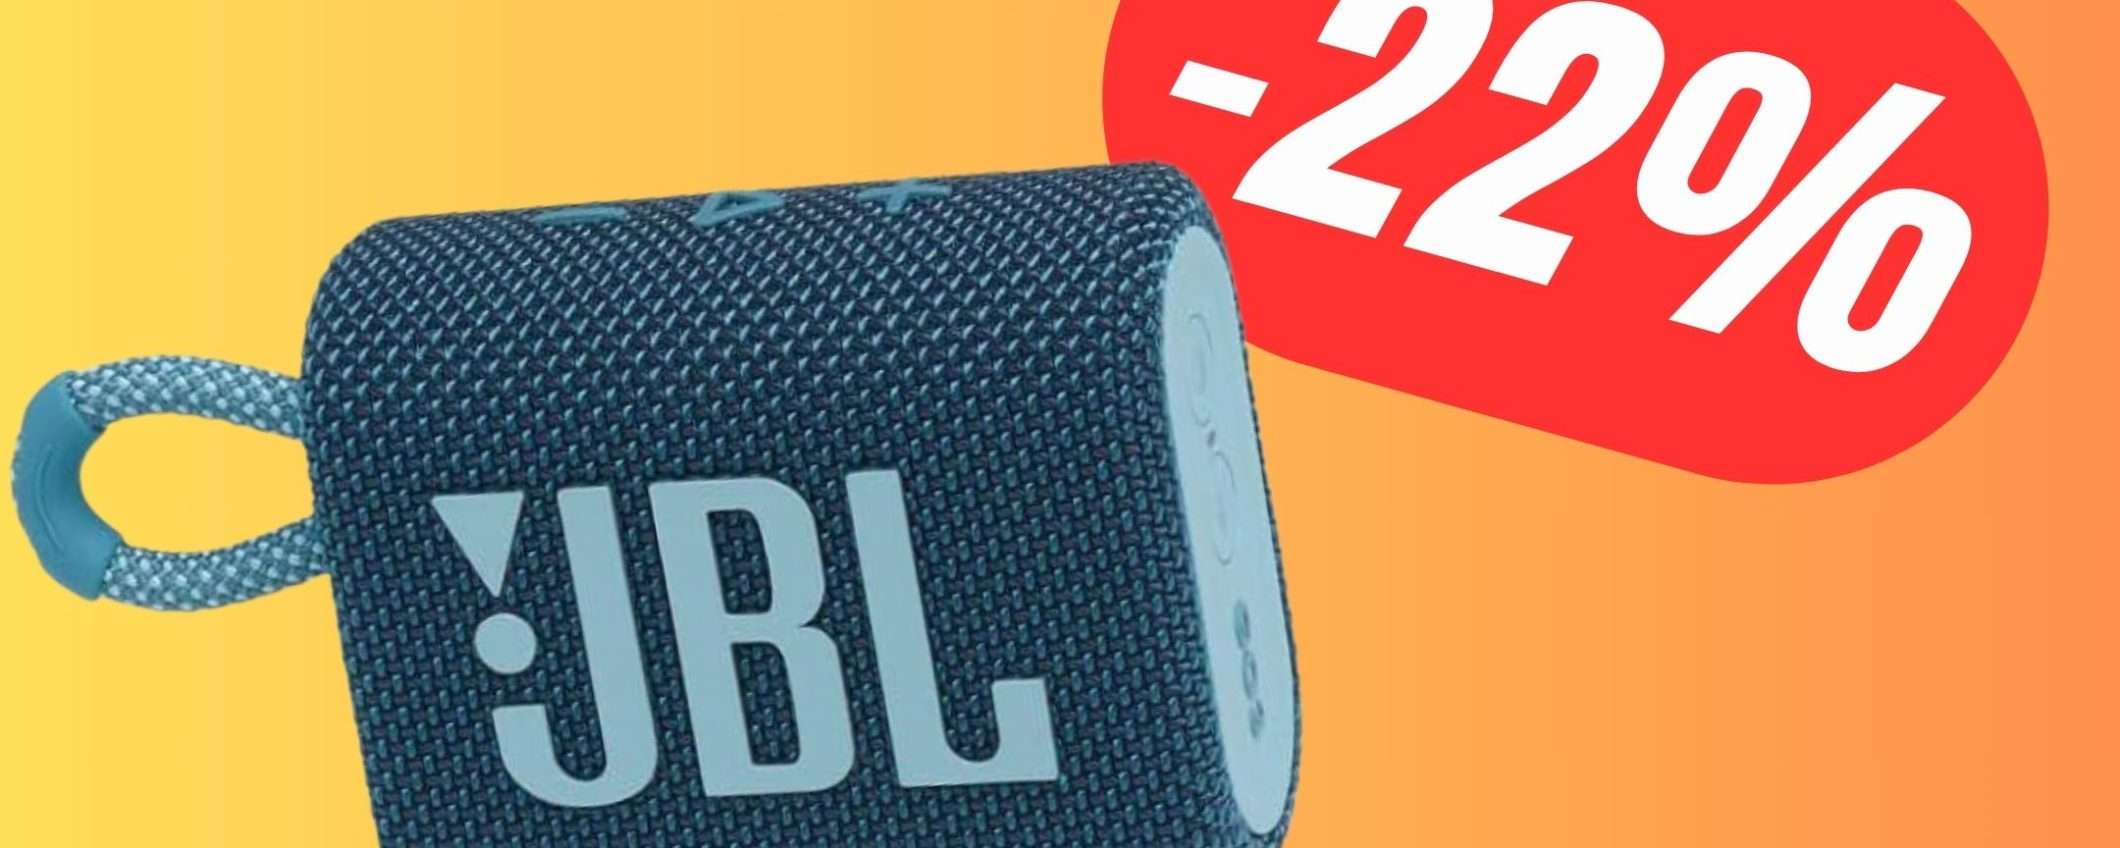 L'iconica Cassa Bluetooth di JBL costa solo 34€ grazie all'OFFERTA